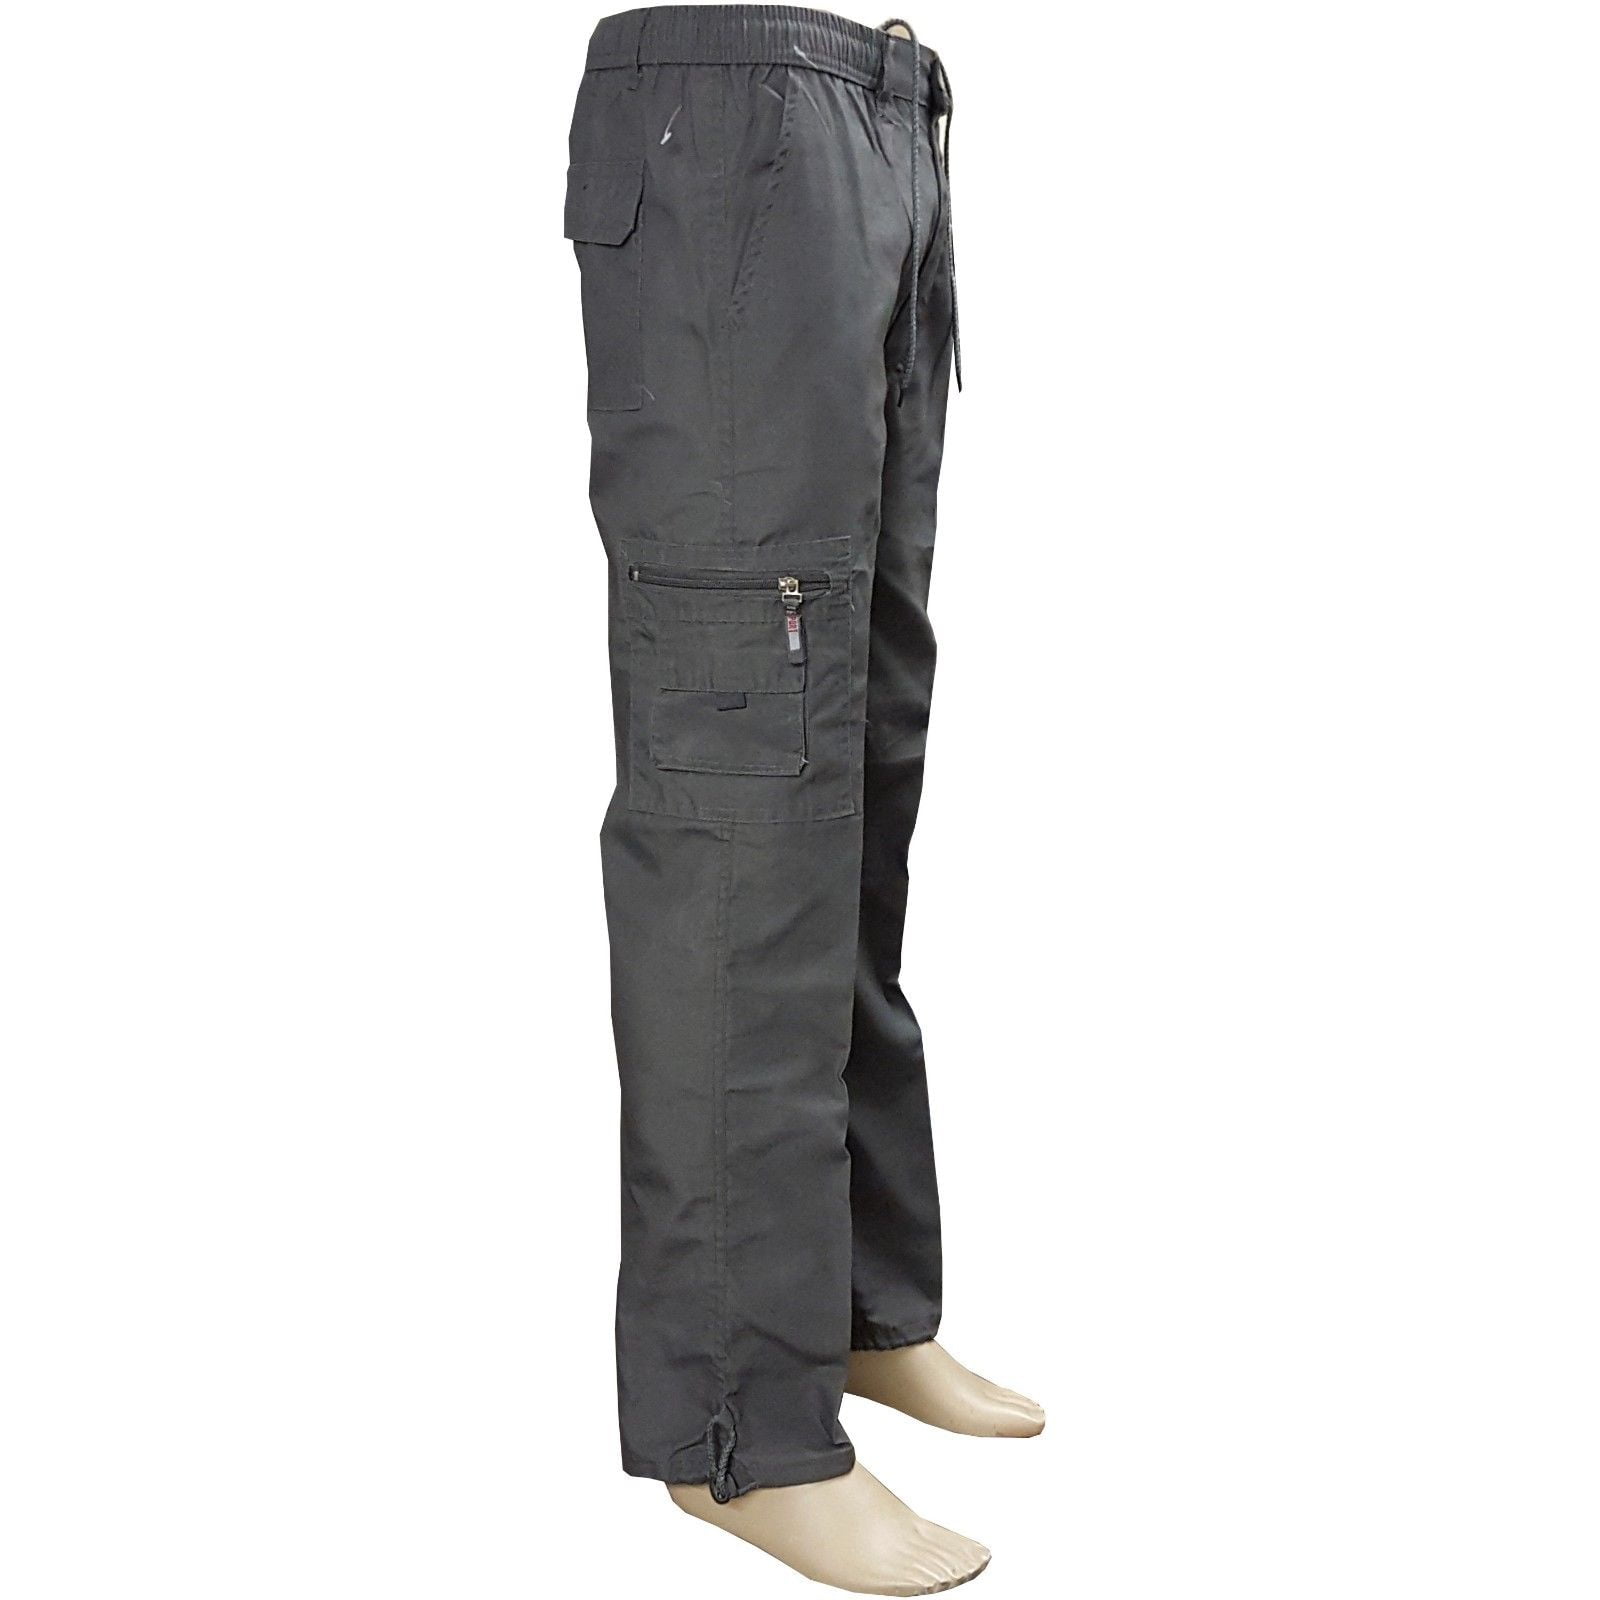 Combat Style Work Trousers Heavy Duty Pants Knee Pad Pocket Cargo Multi Pockets.